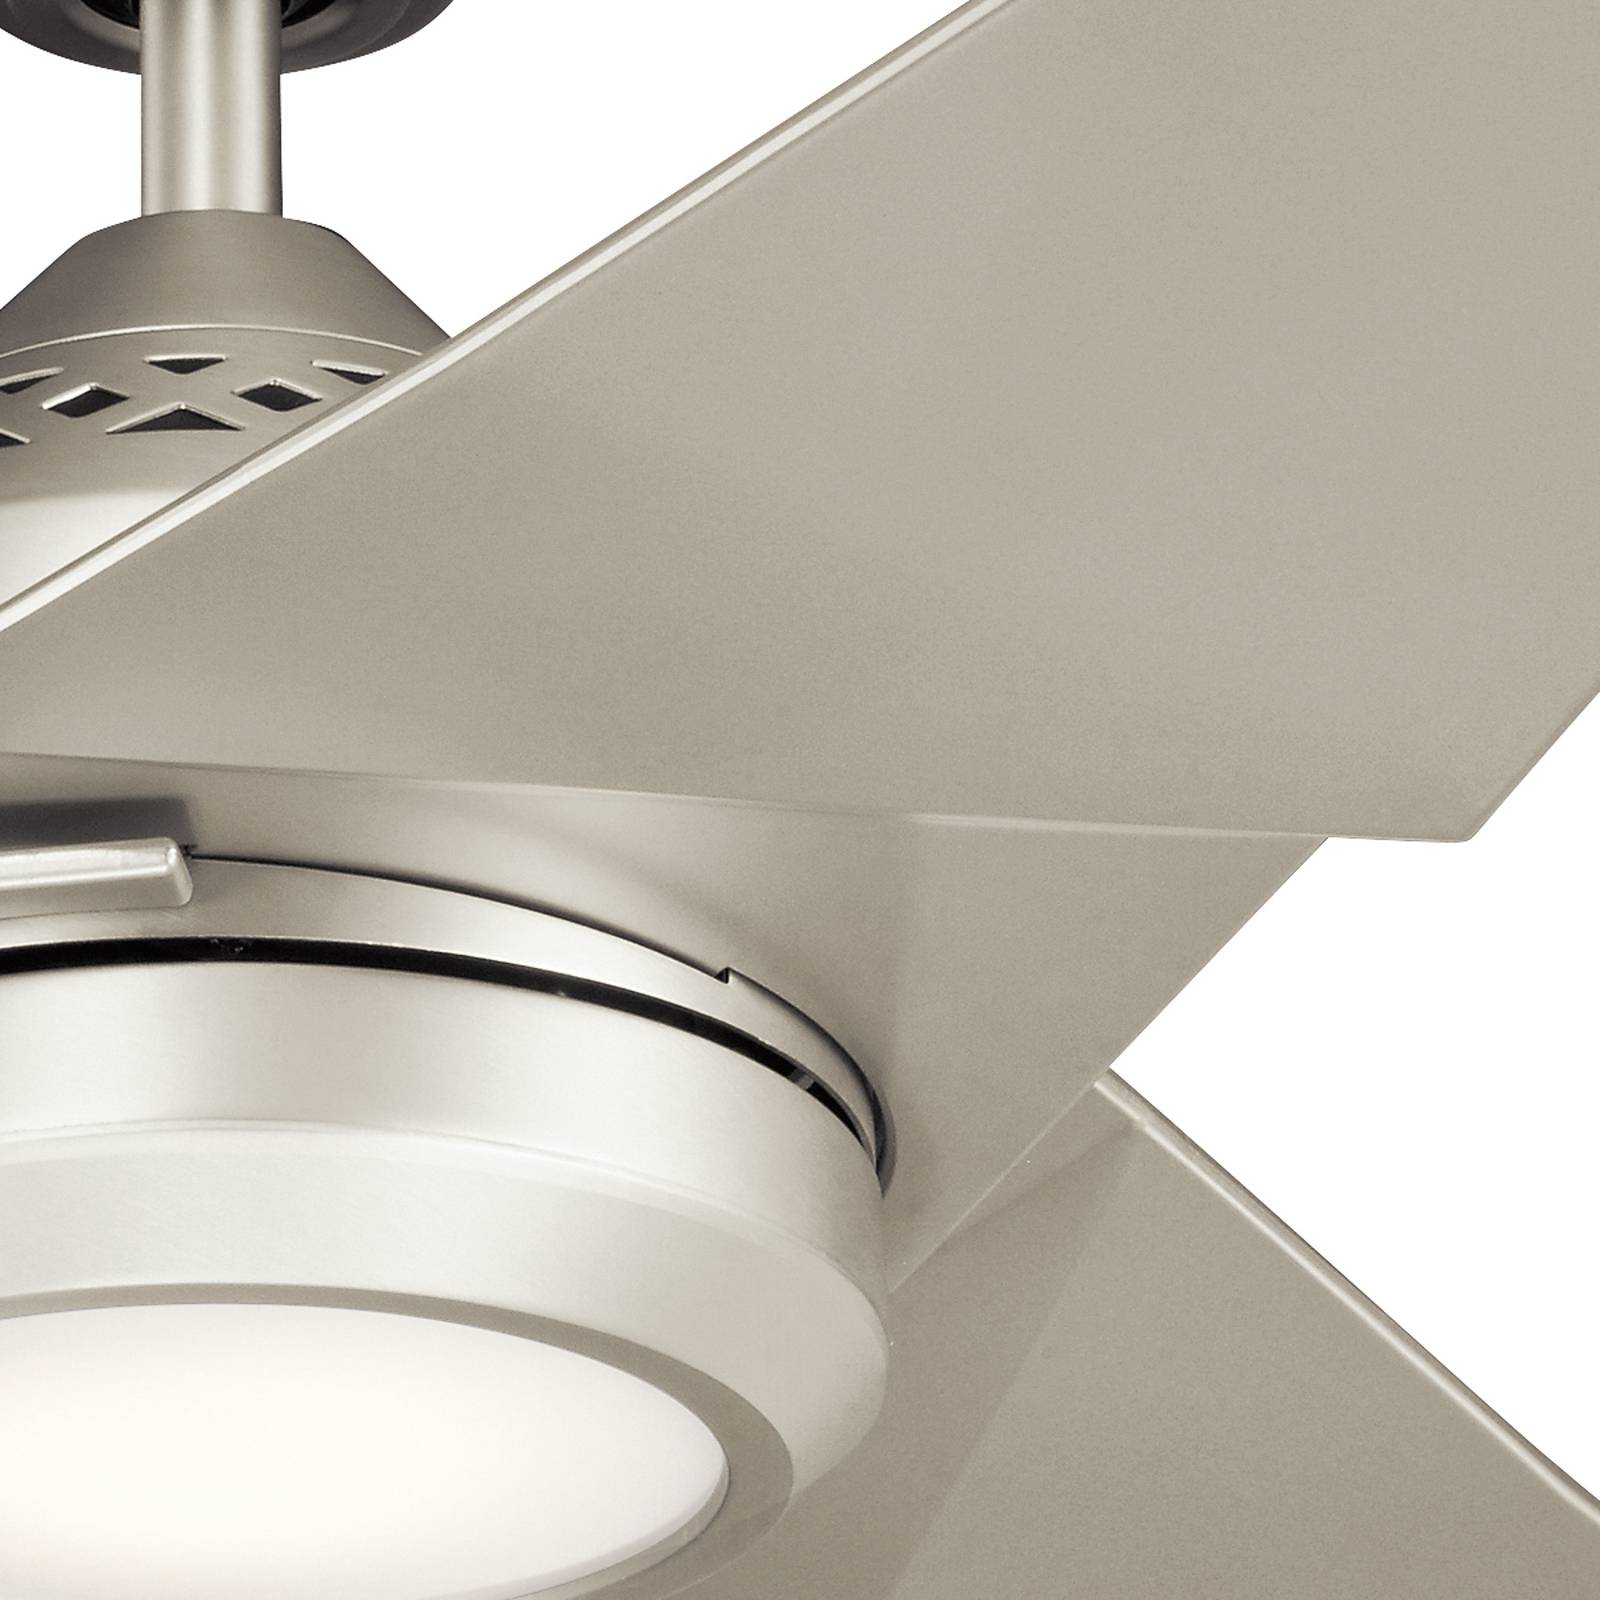 KICHLER LED stropní ventilátor Jade, stříbrný, tichý, Ø 152 cm, 60 W